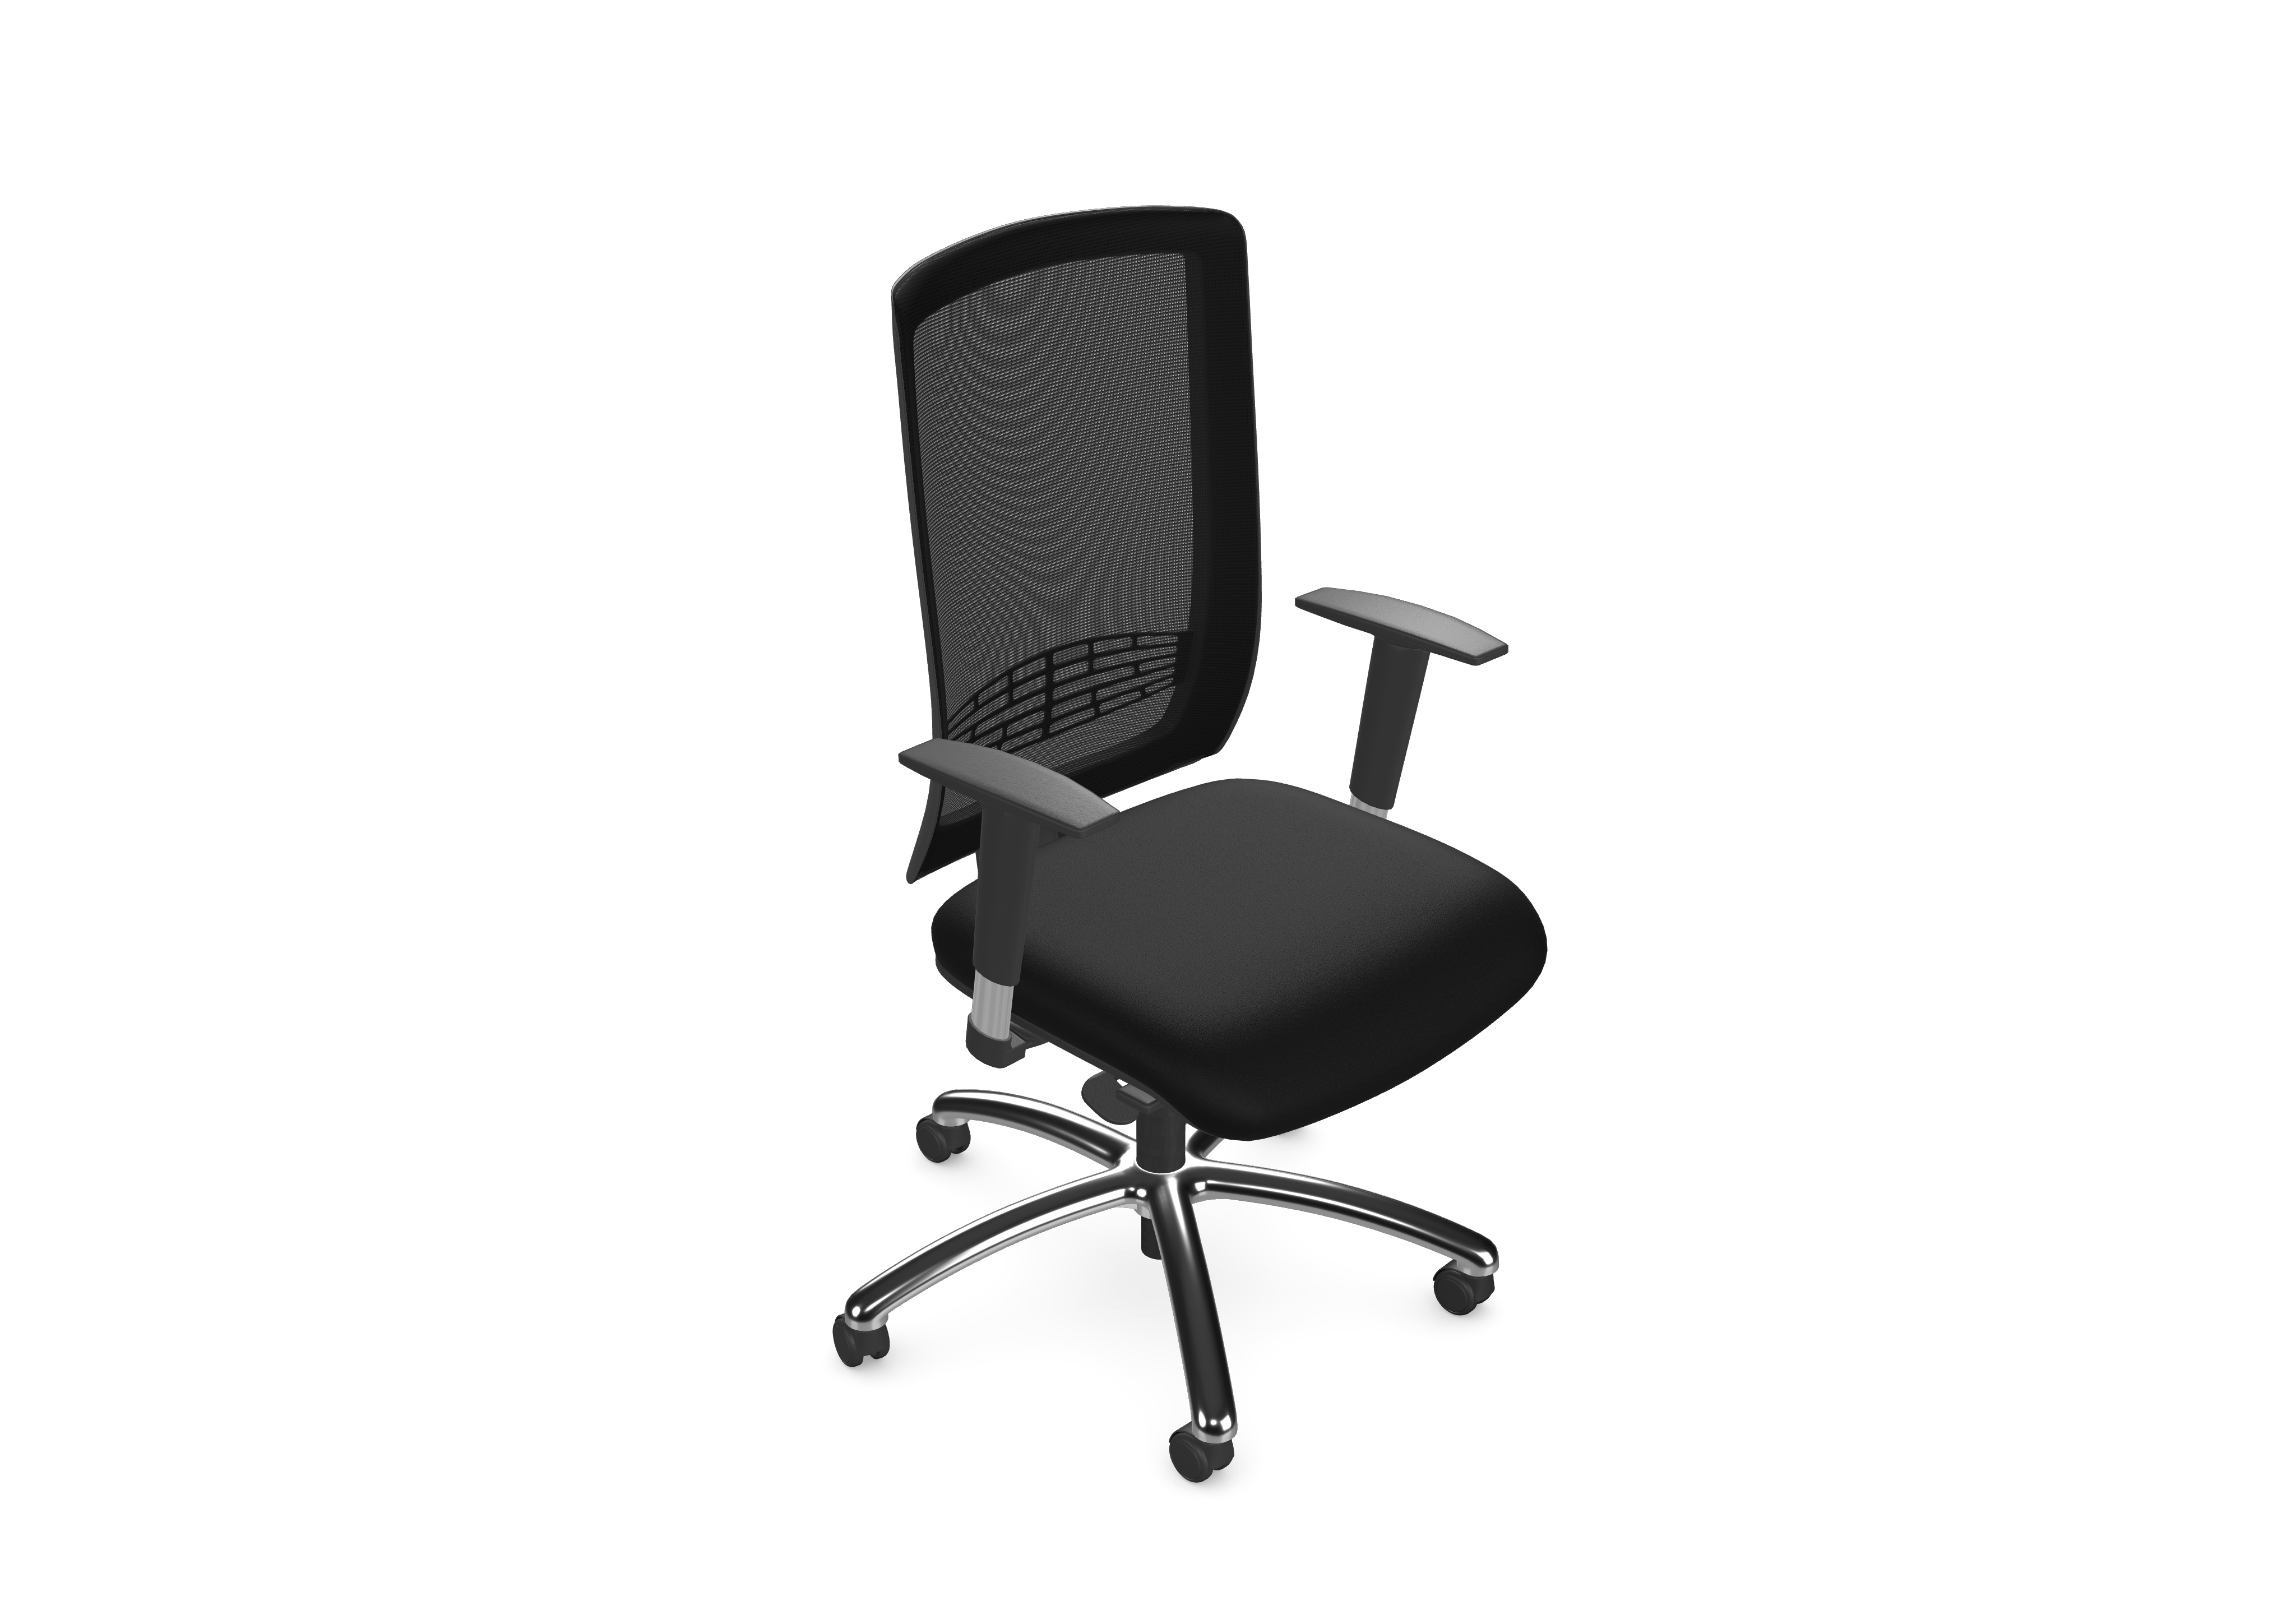 Begin Black Swivel Chair, Mesh Backrest, Chrome Base, Seat Slide, Lumbar Support, Vario Adjustable Arms